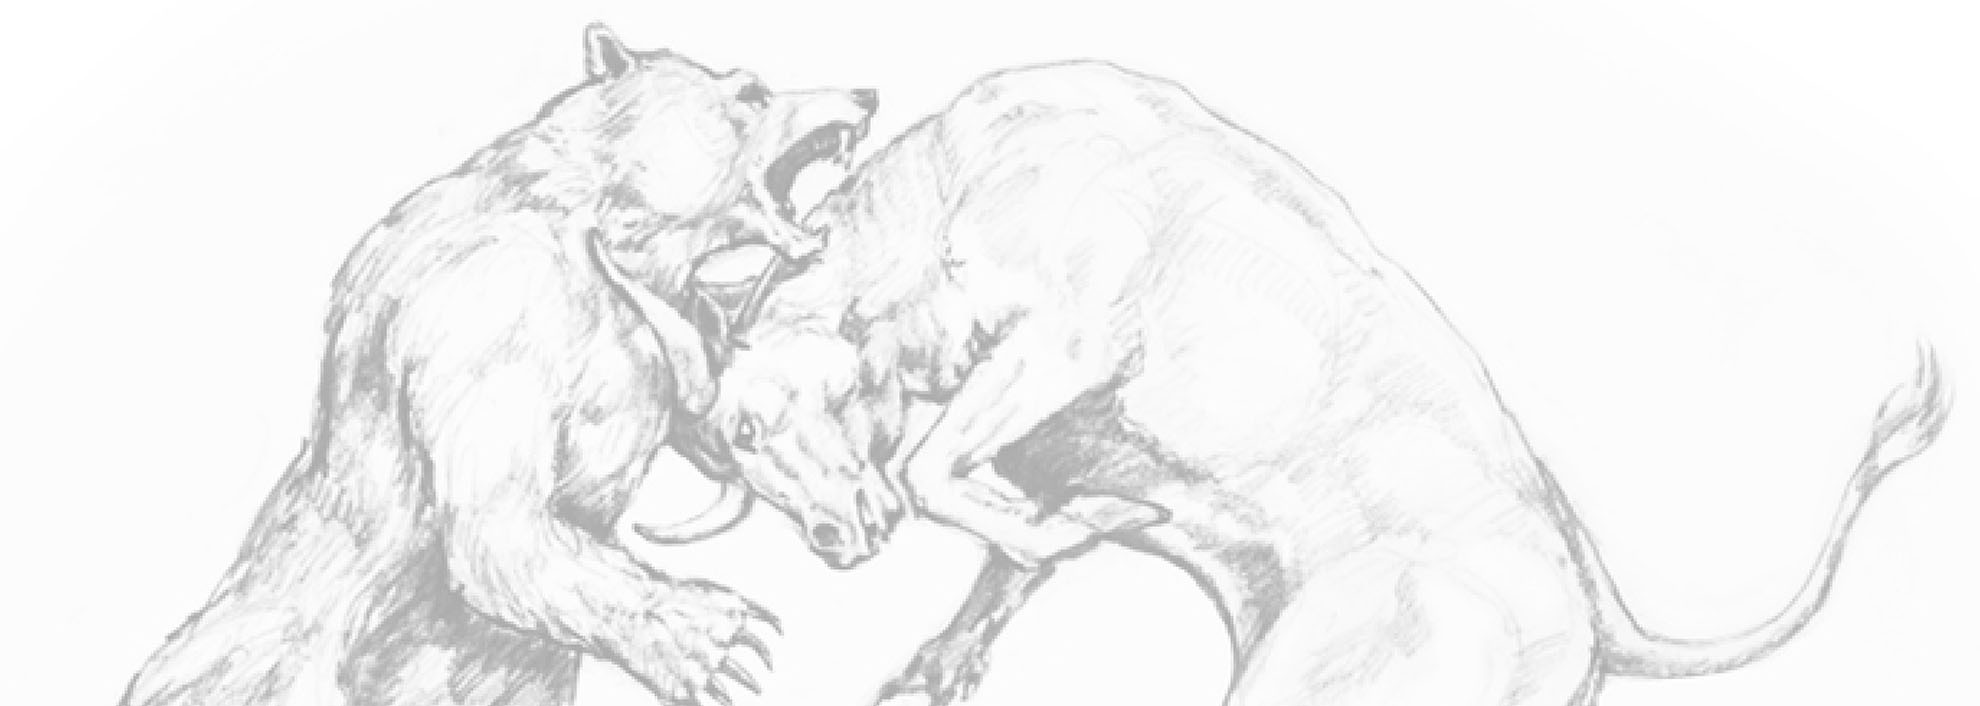 Bear & Bull Sketch